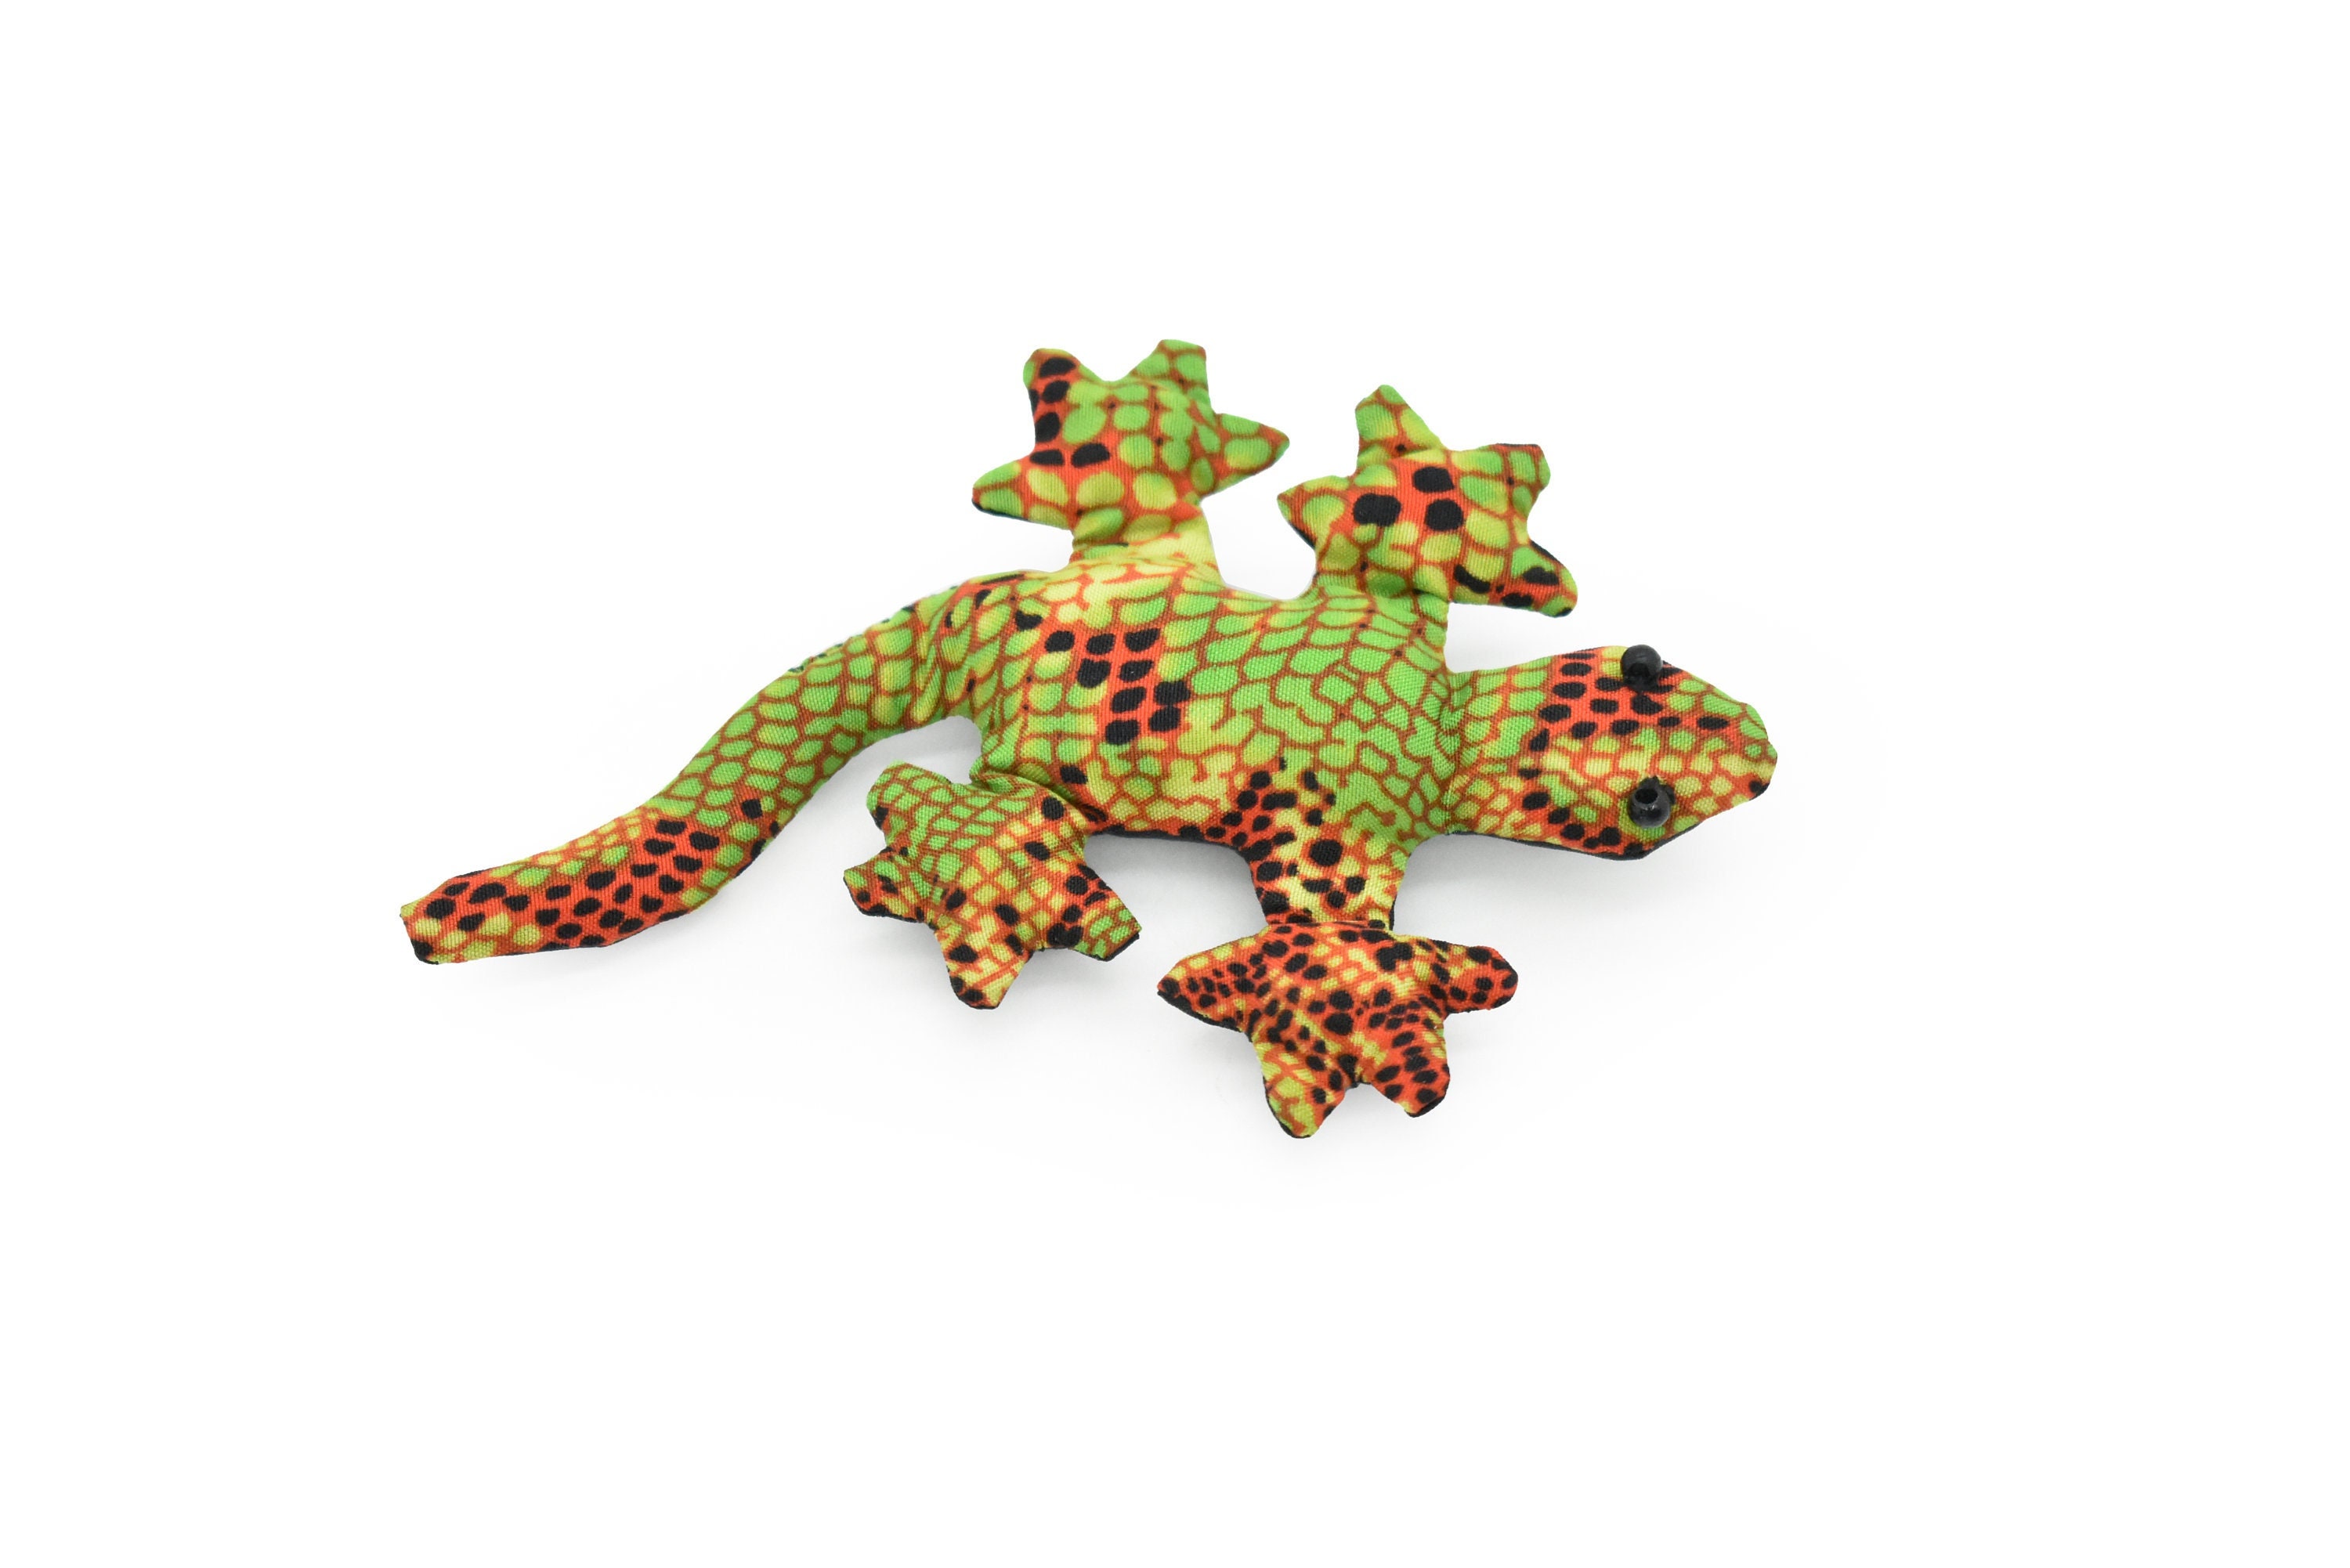  ELAINREN Super Soft Chameleon Stuffed Colorful Lizard Toy  Realistic Green Chameleon Dragon Plush Pillow Soft Chameleon Lifelike  Lizard Plushie Dolls Gifts : Toys & Games